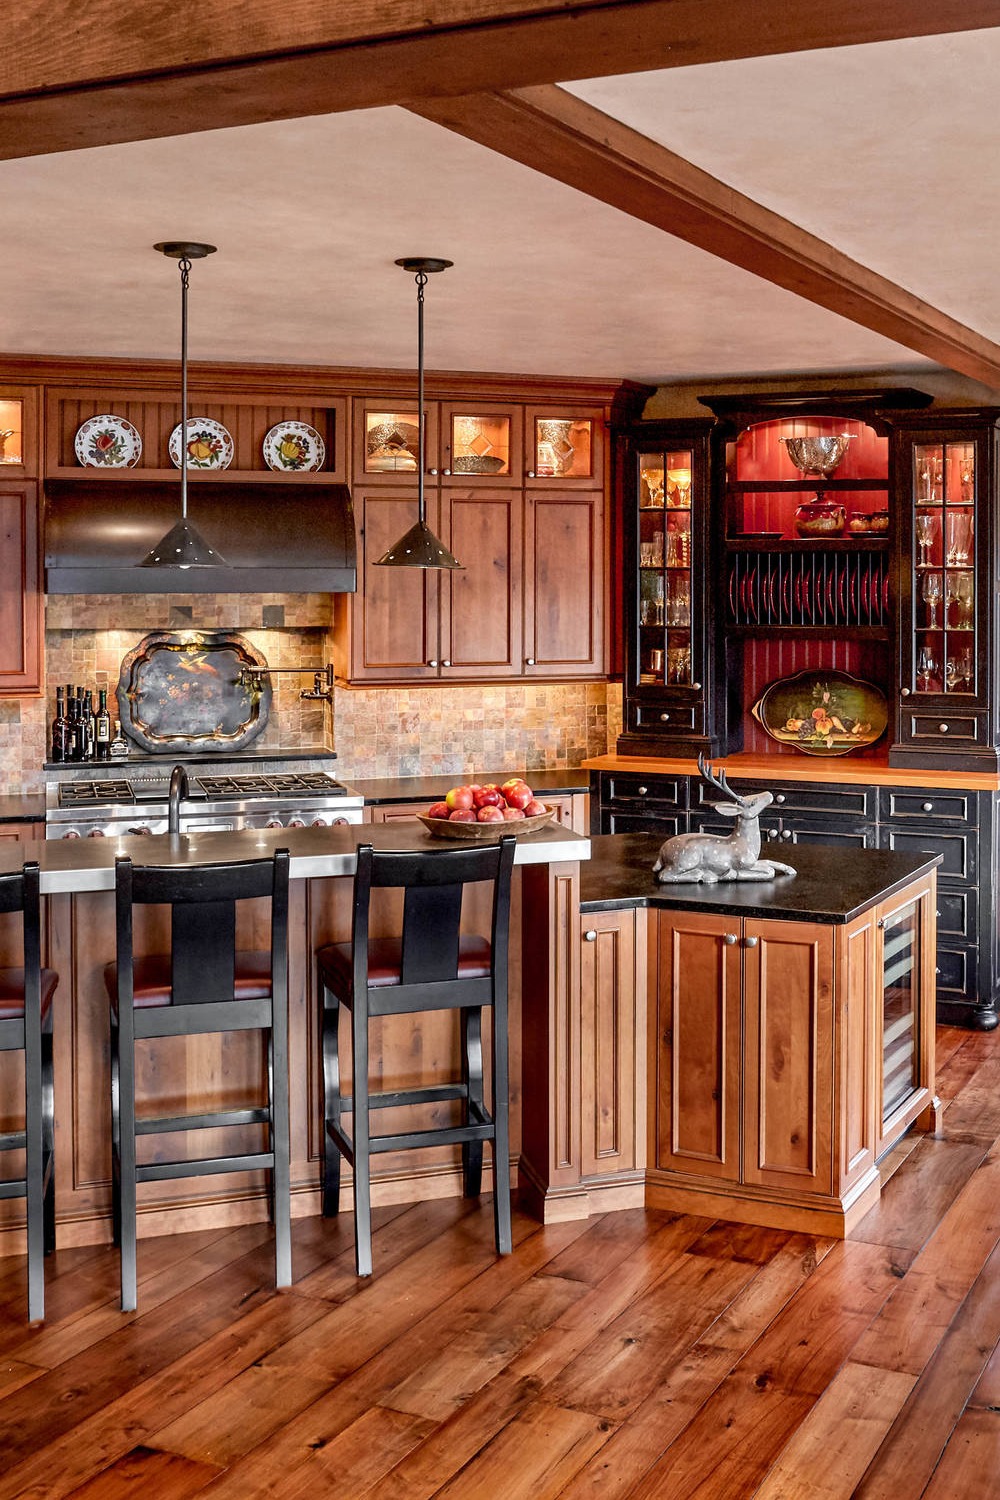 Rustic Kitchens Wood Cabinets Hardwood Floors Stainless Steel Appliances